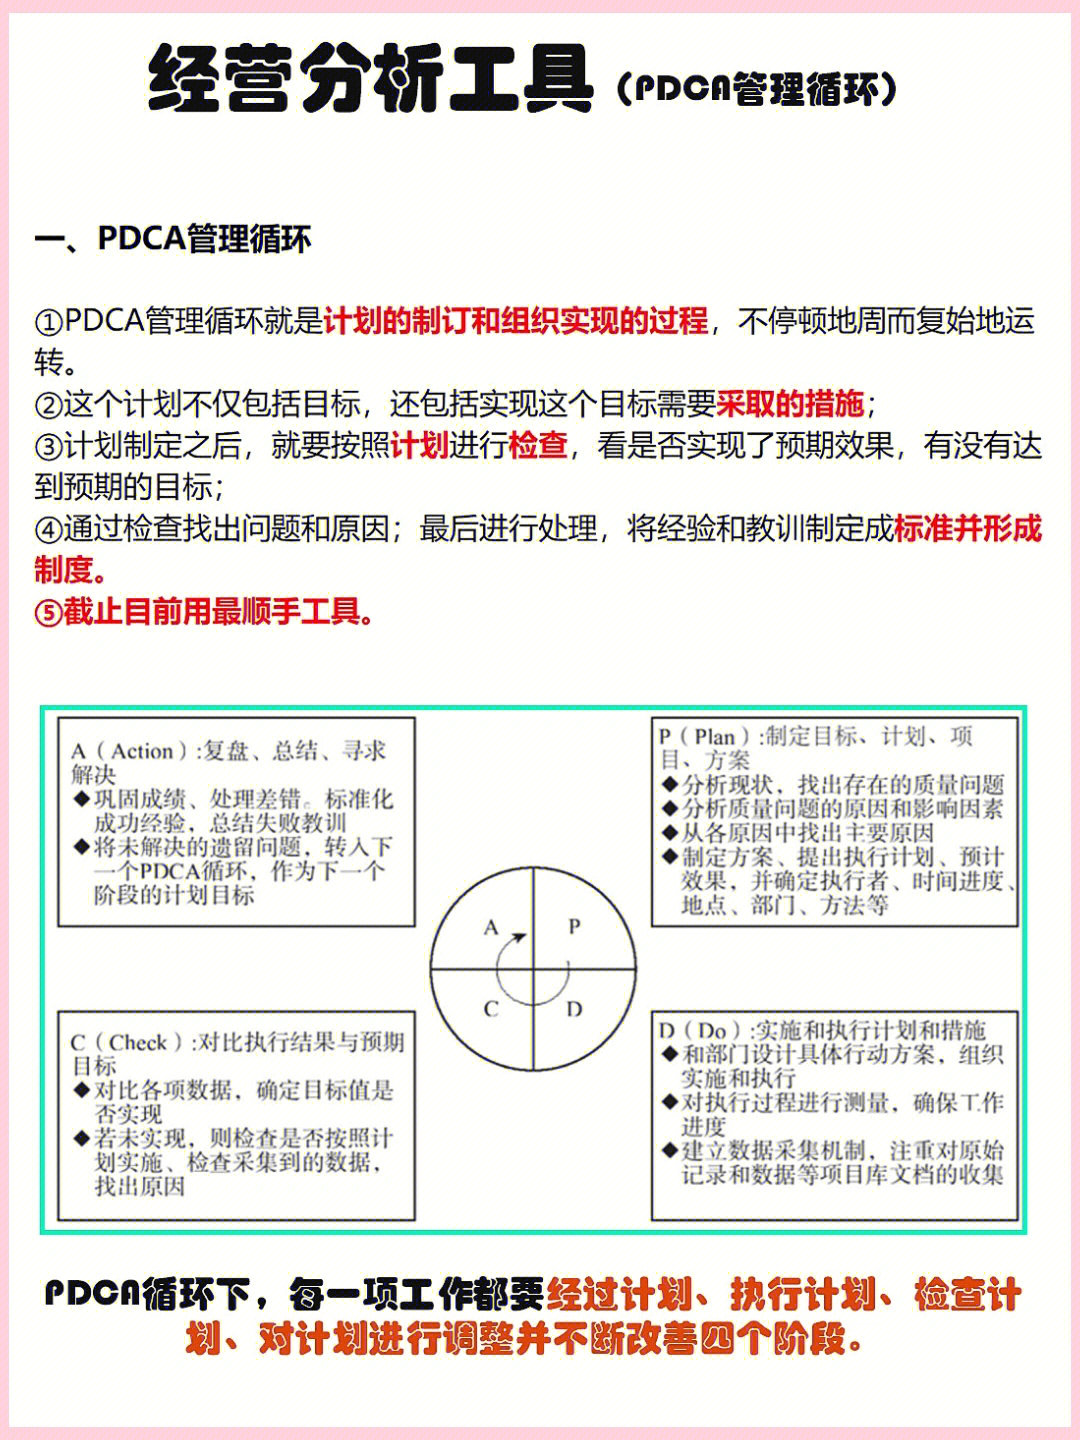 pdca常用工具图表图片